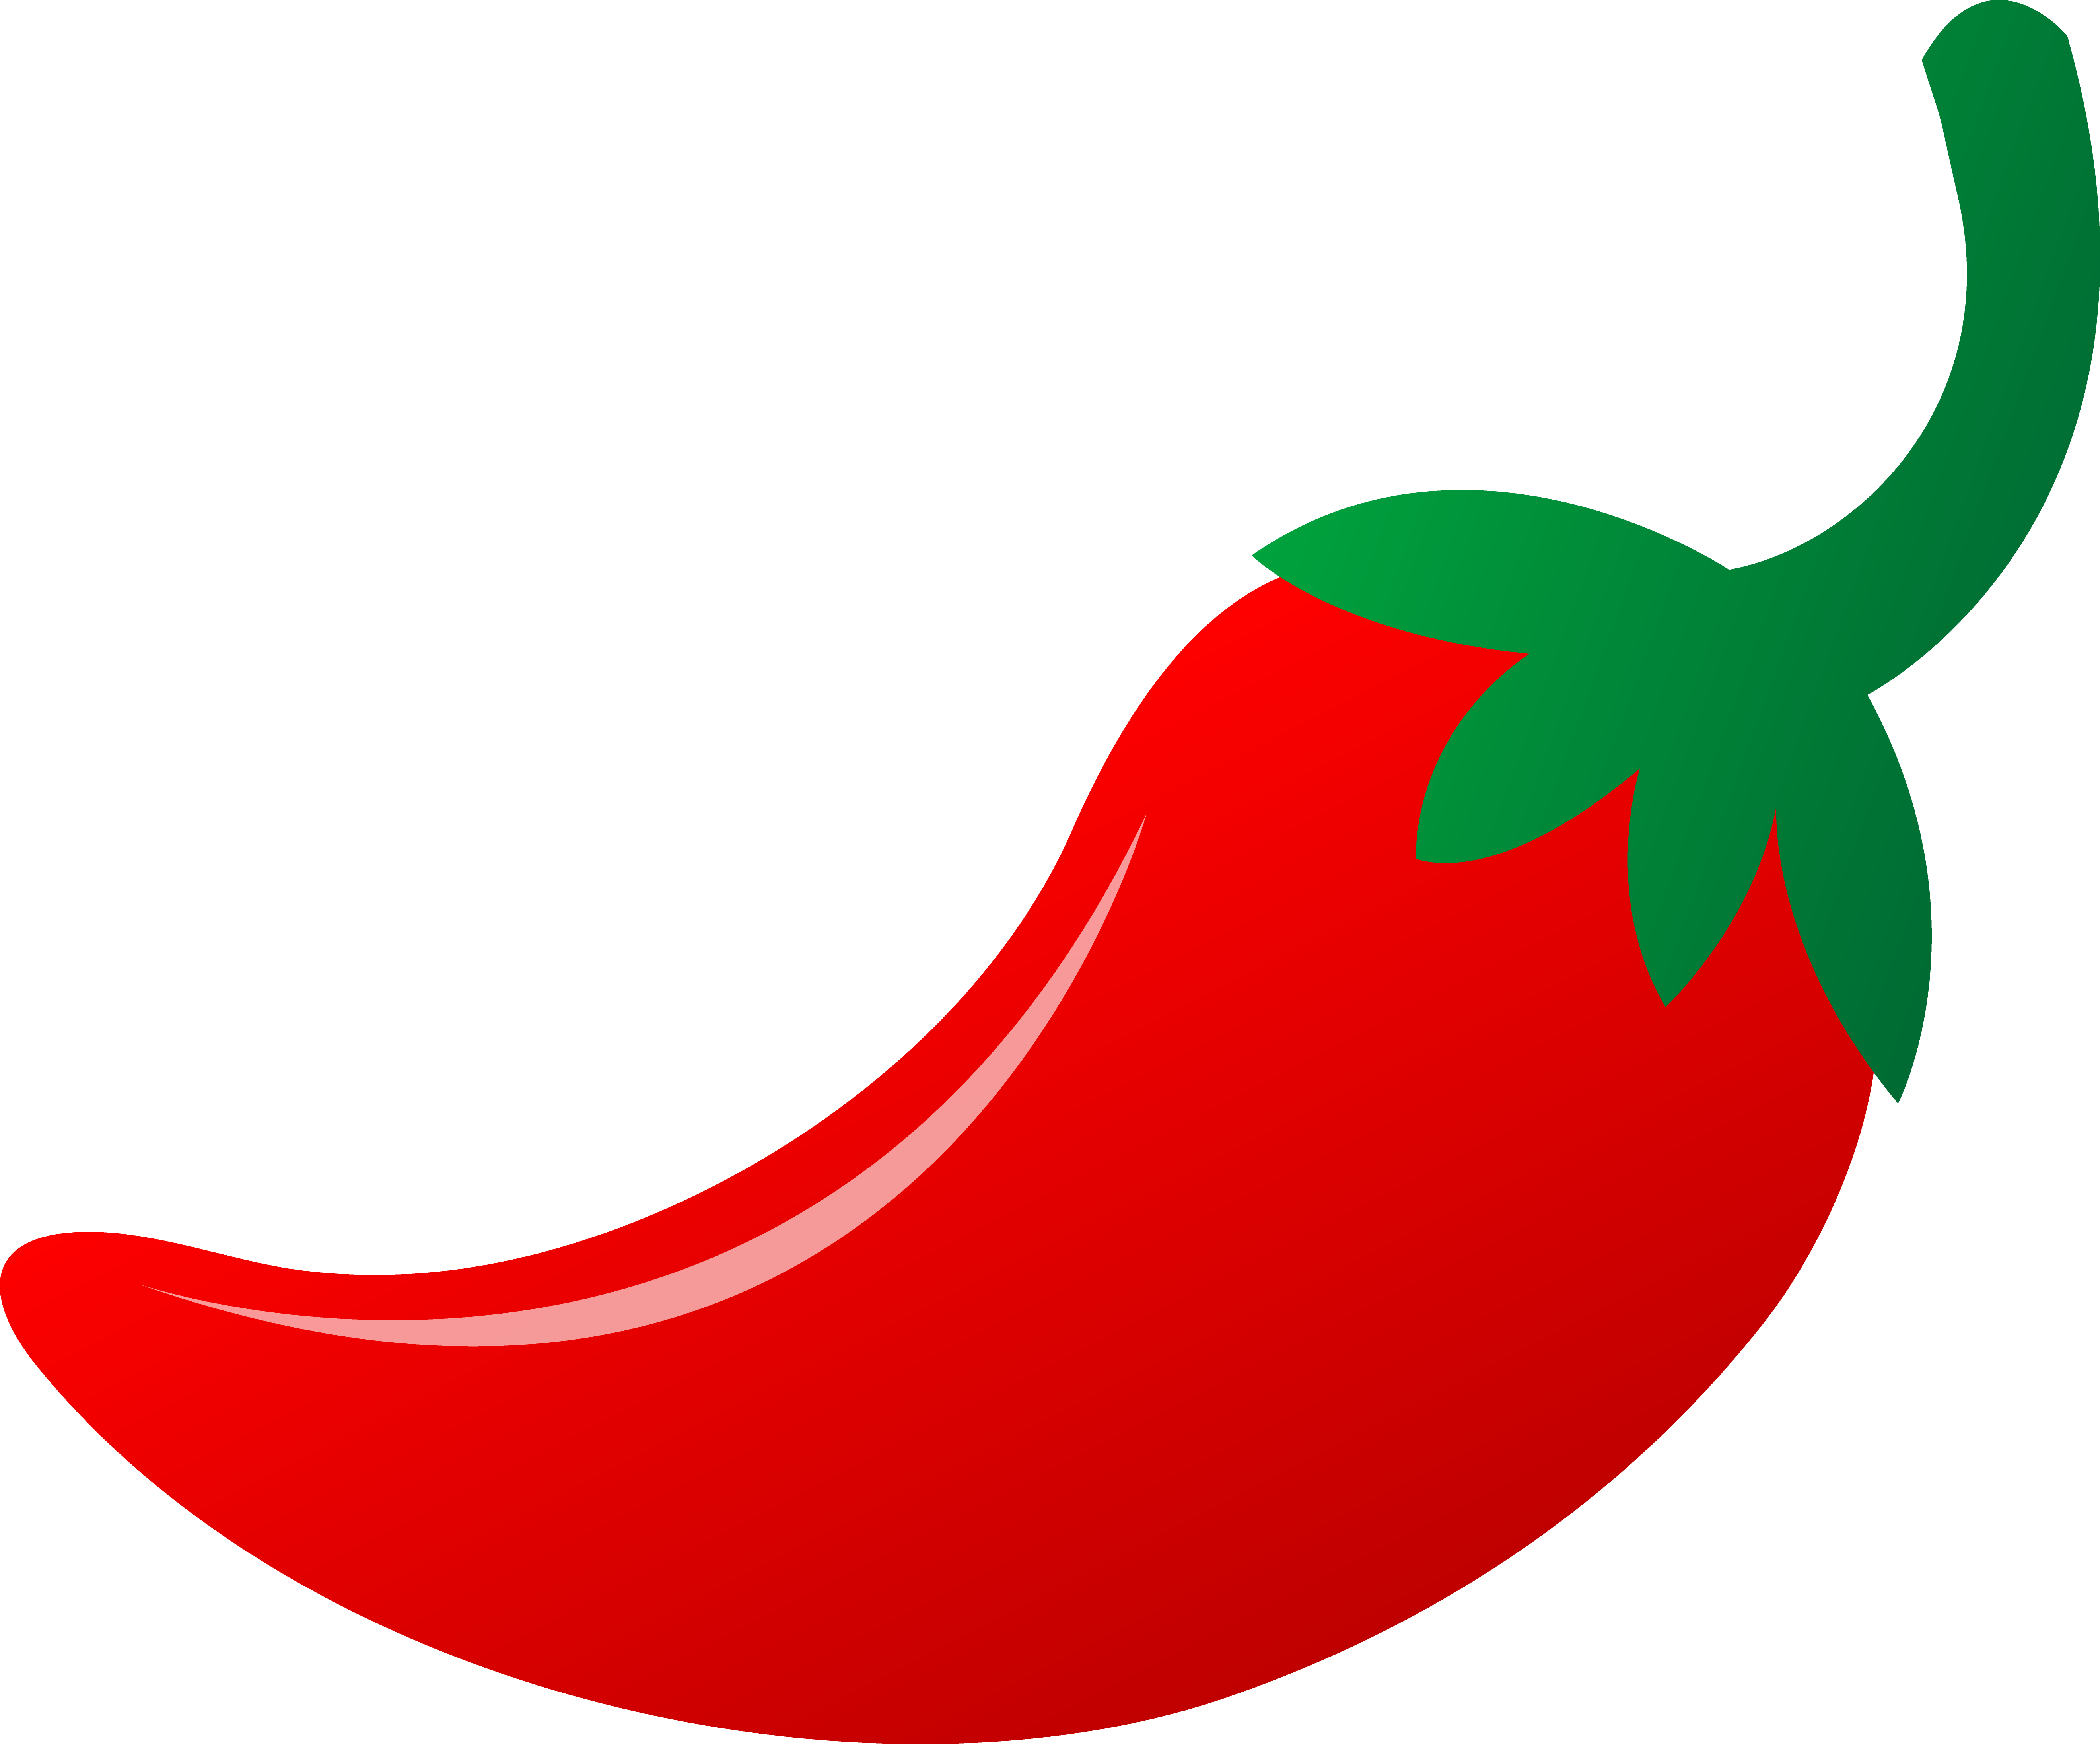 ... jalapeno pepper illustrat